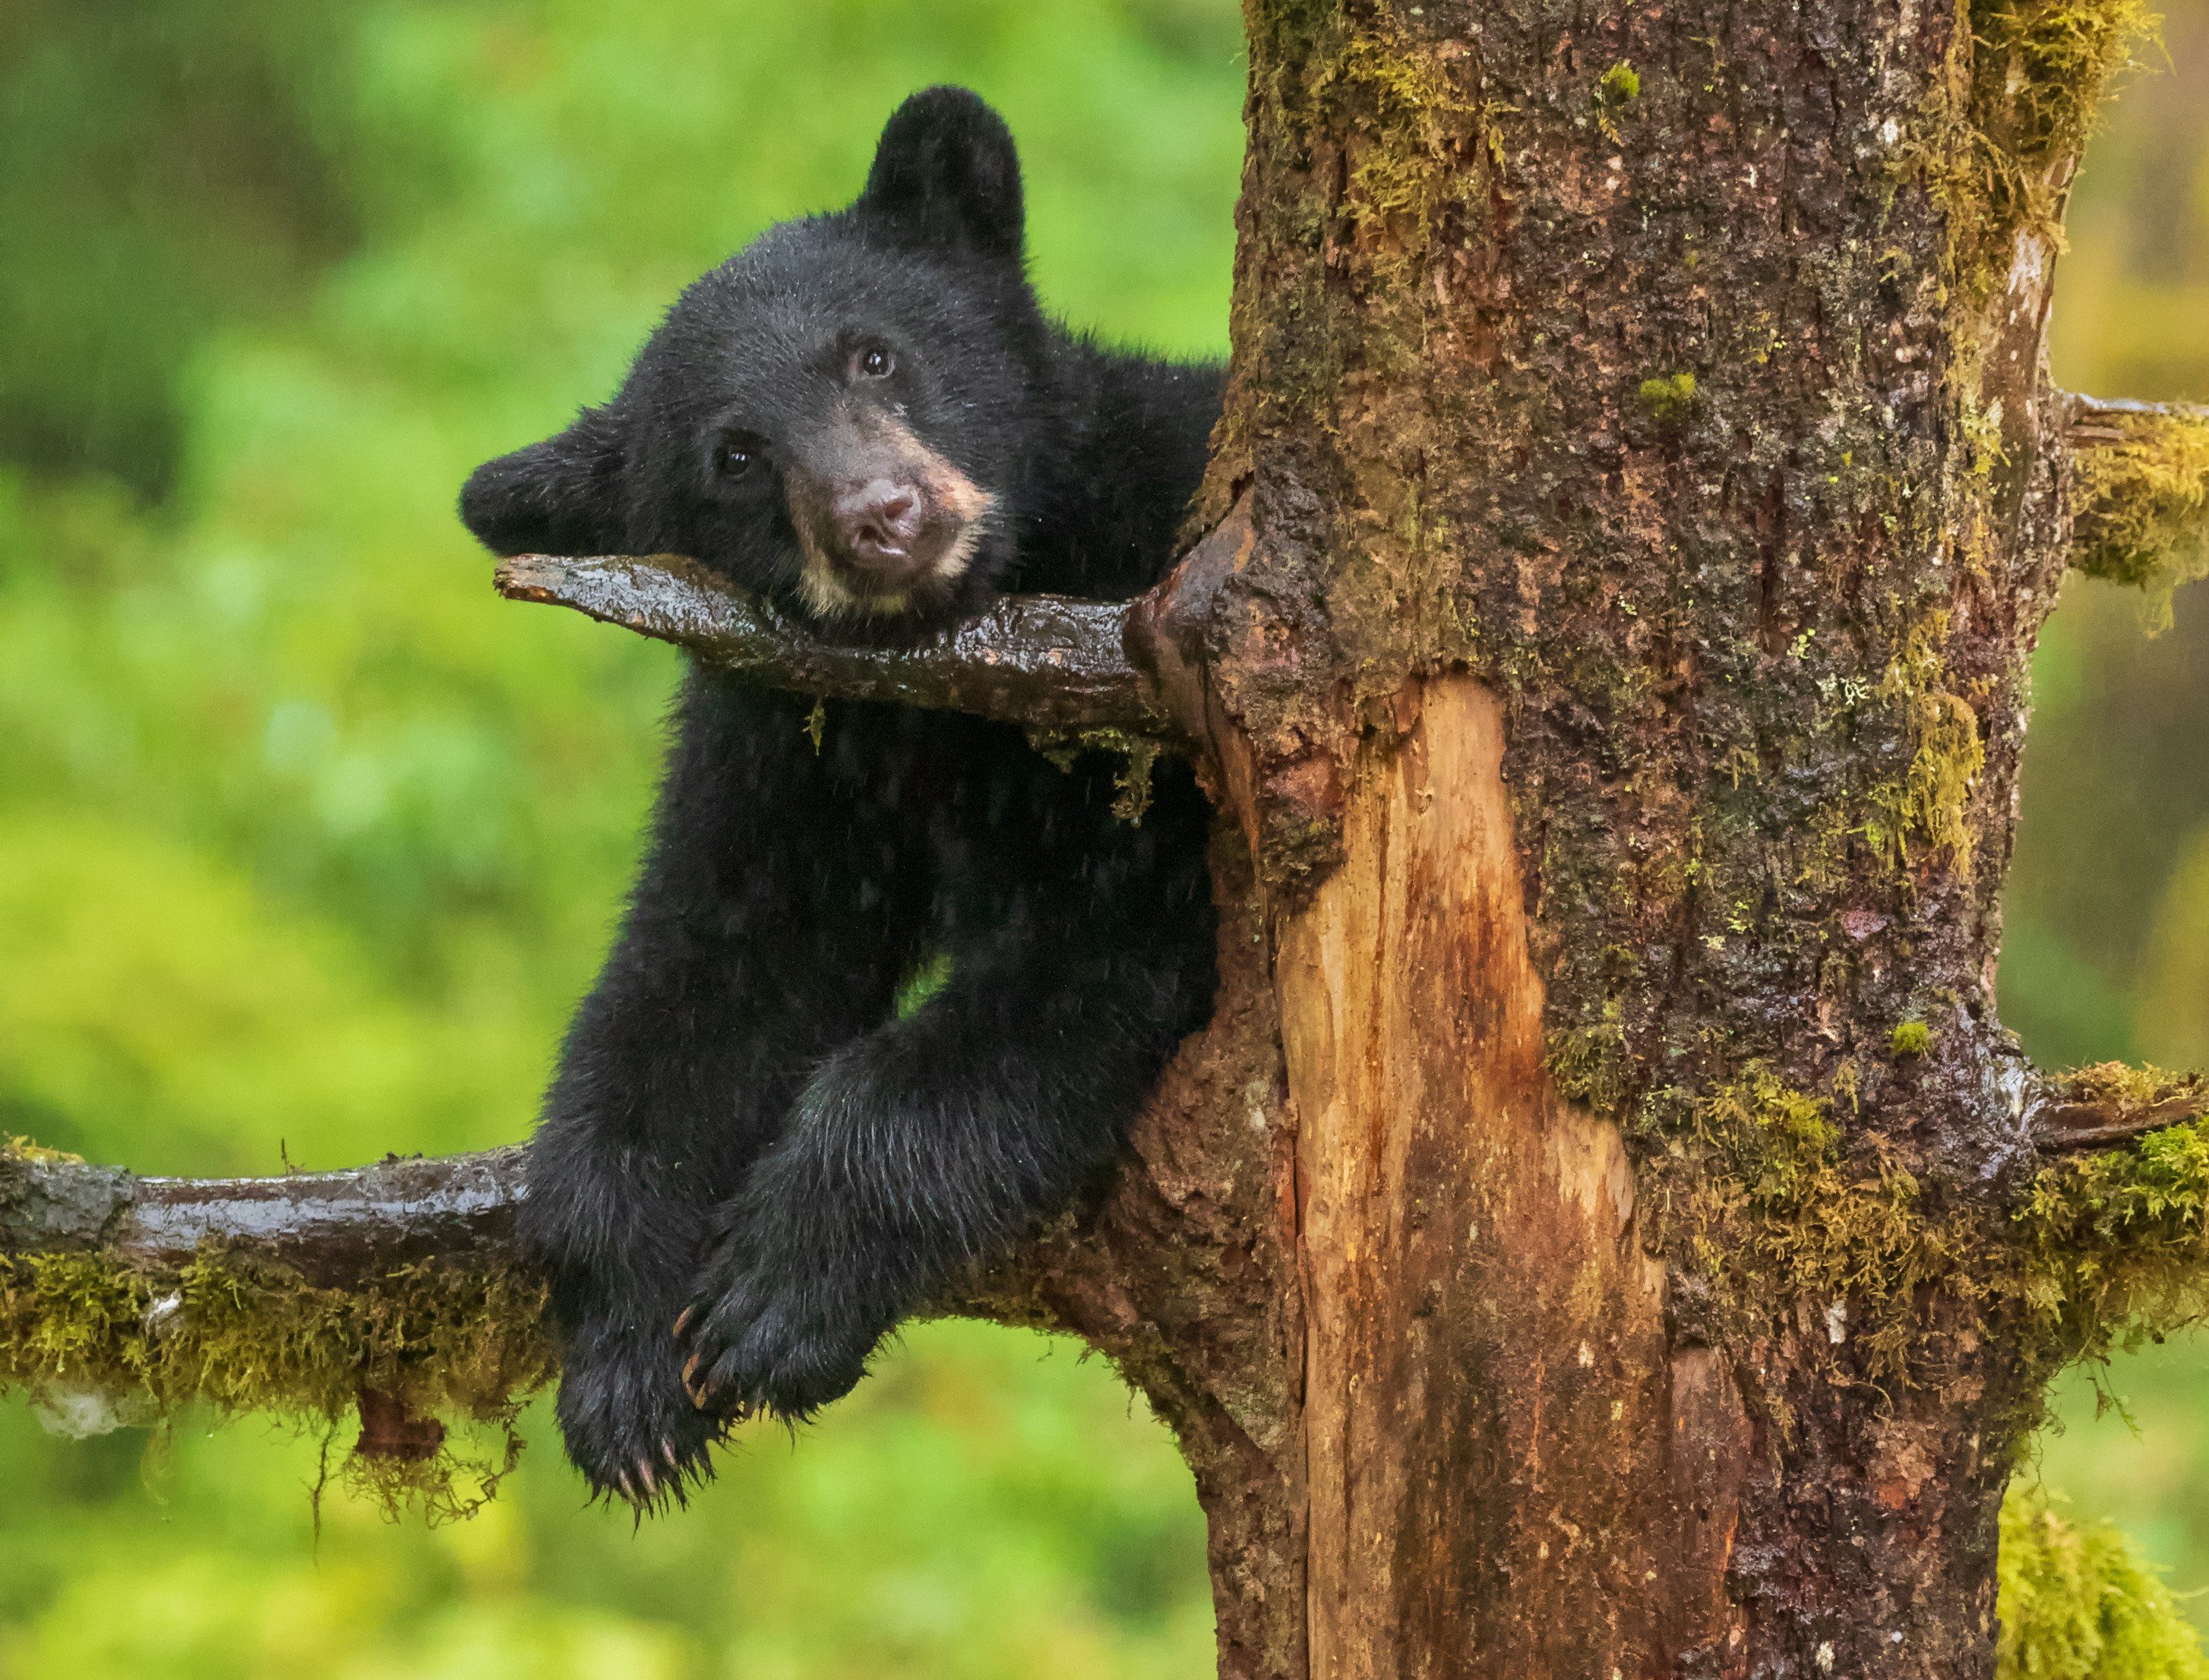 Black bear cub resting its head on tree branch in the rain.